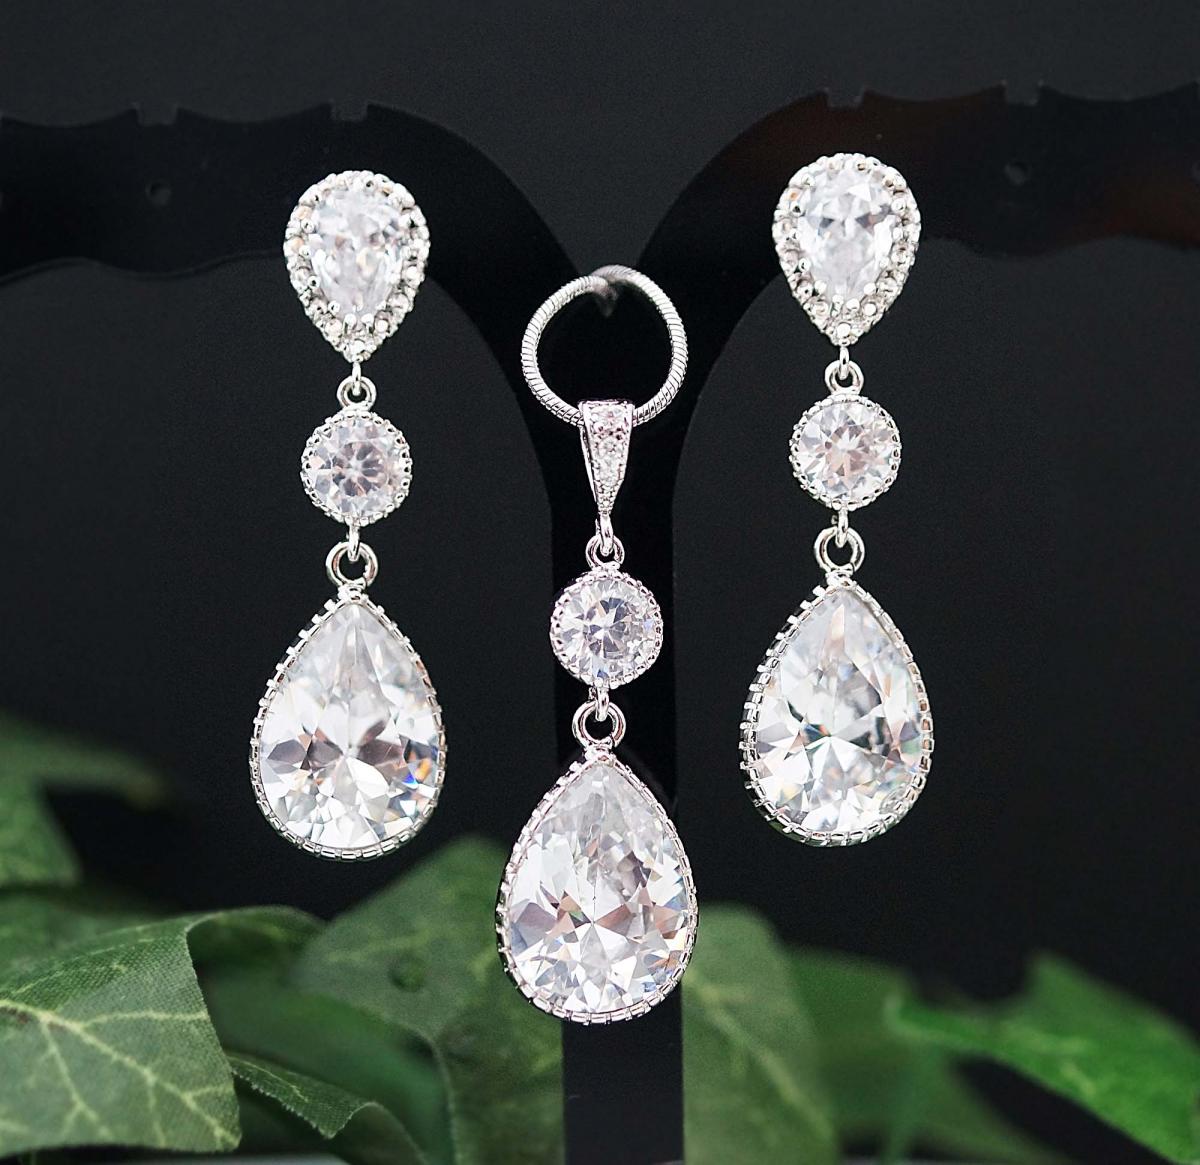 Wedding Bridal Jewelry Bridal Earrings Bridal Earrings Cubic zirconia earrings with clear white cubic zirconia Crystal Tear drops